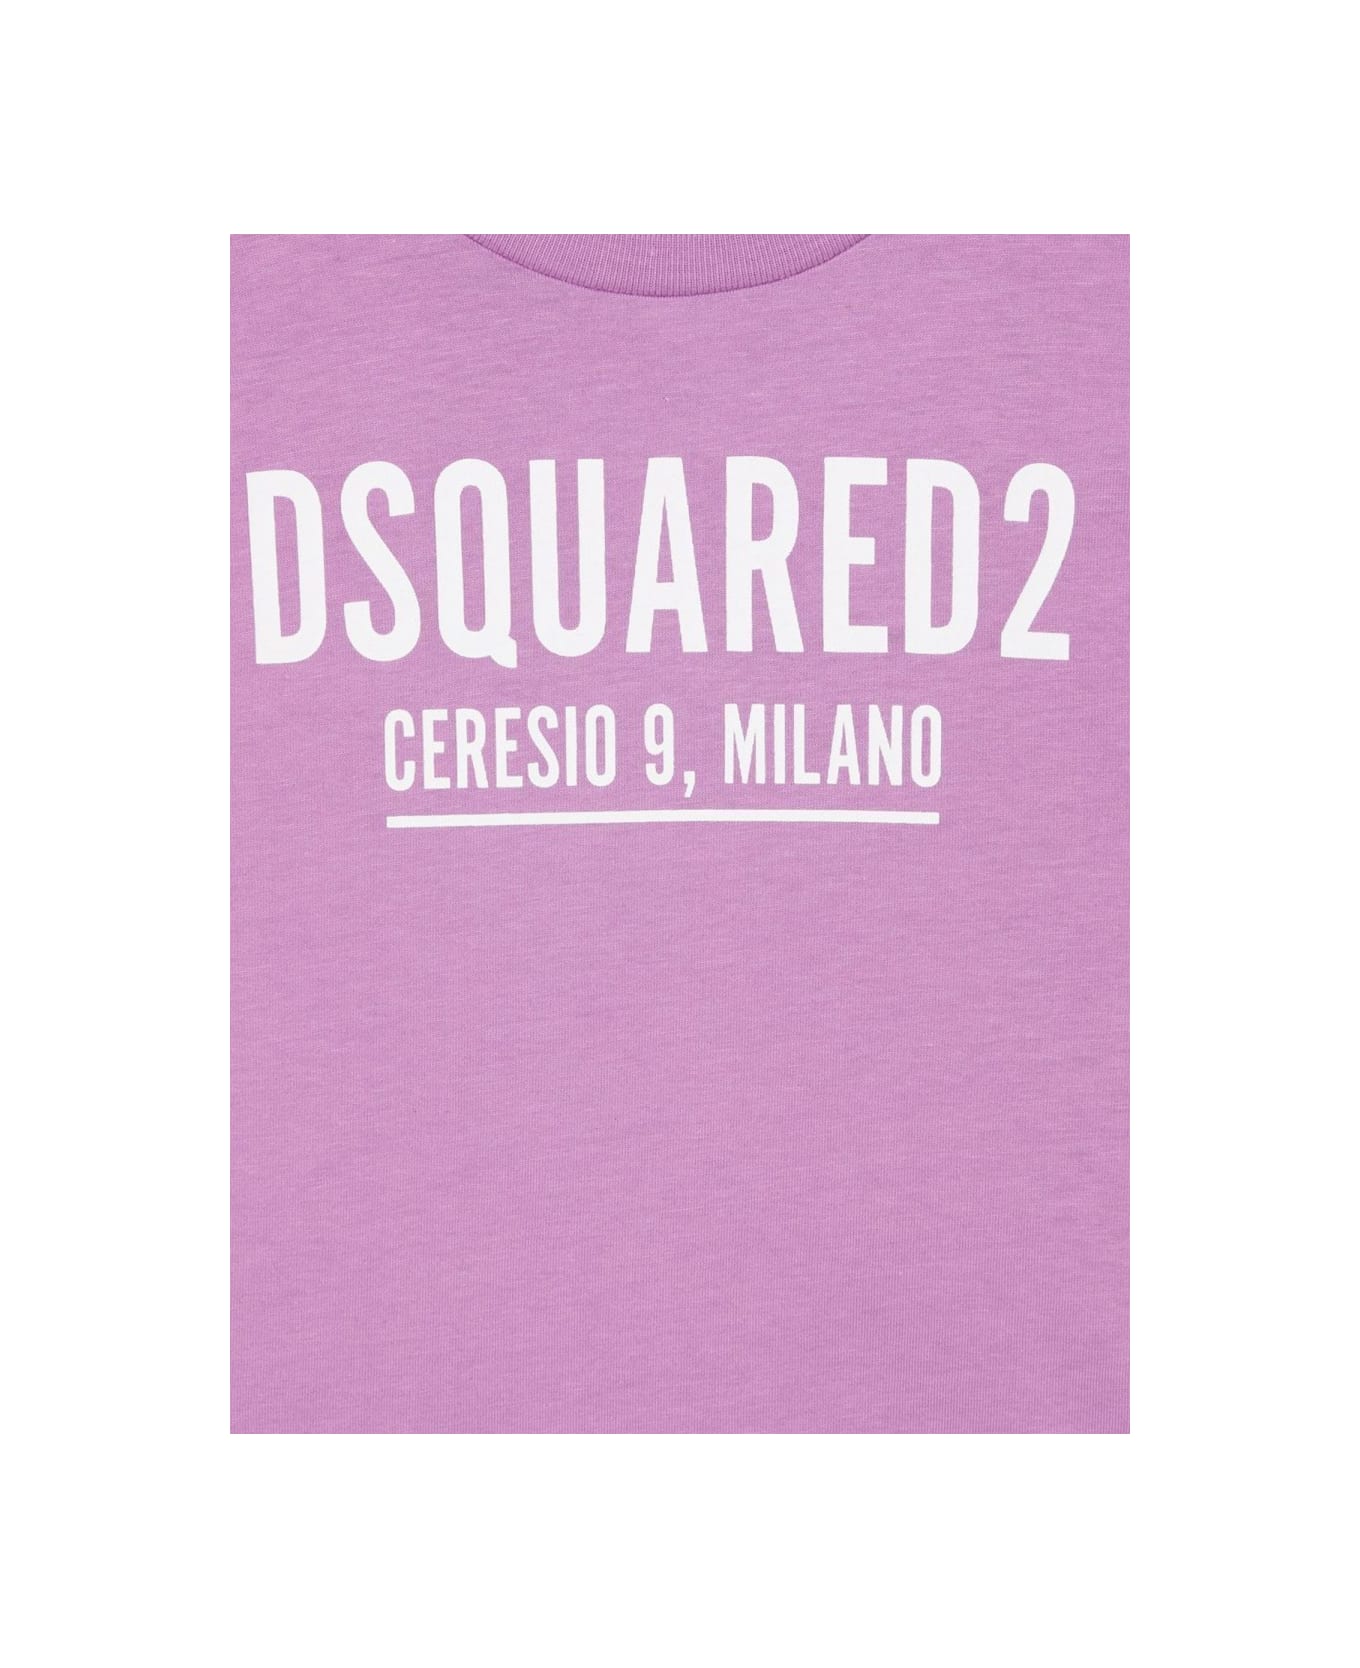 Dsquared2 Shirt - ORANGE